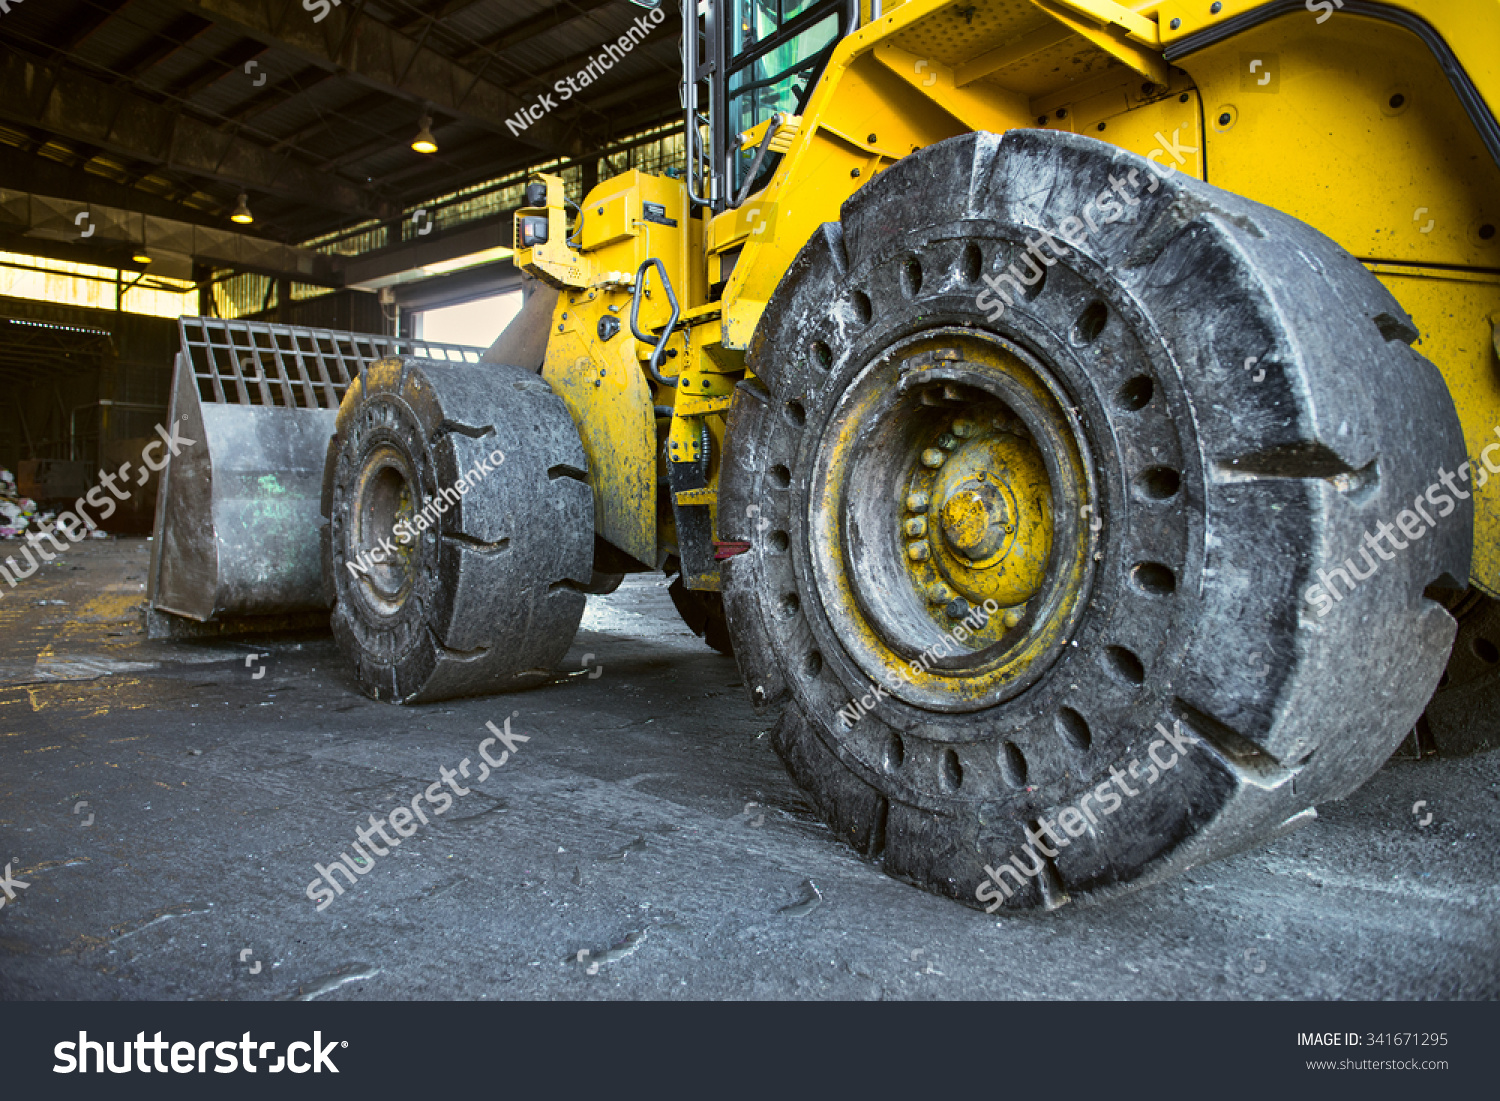 Zdjęcie stockowe "Heavy Duty Construction Digger Yellow Excavator"...